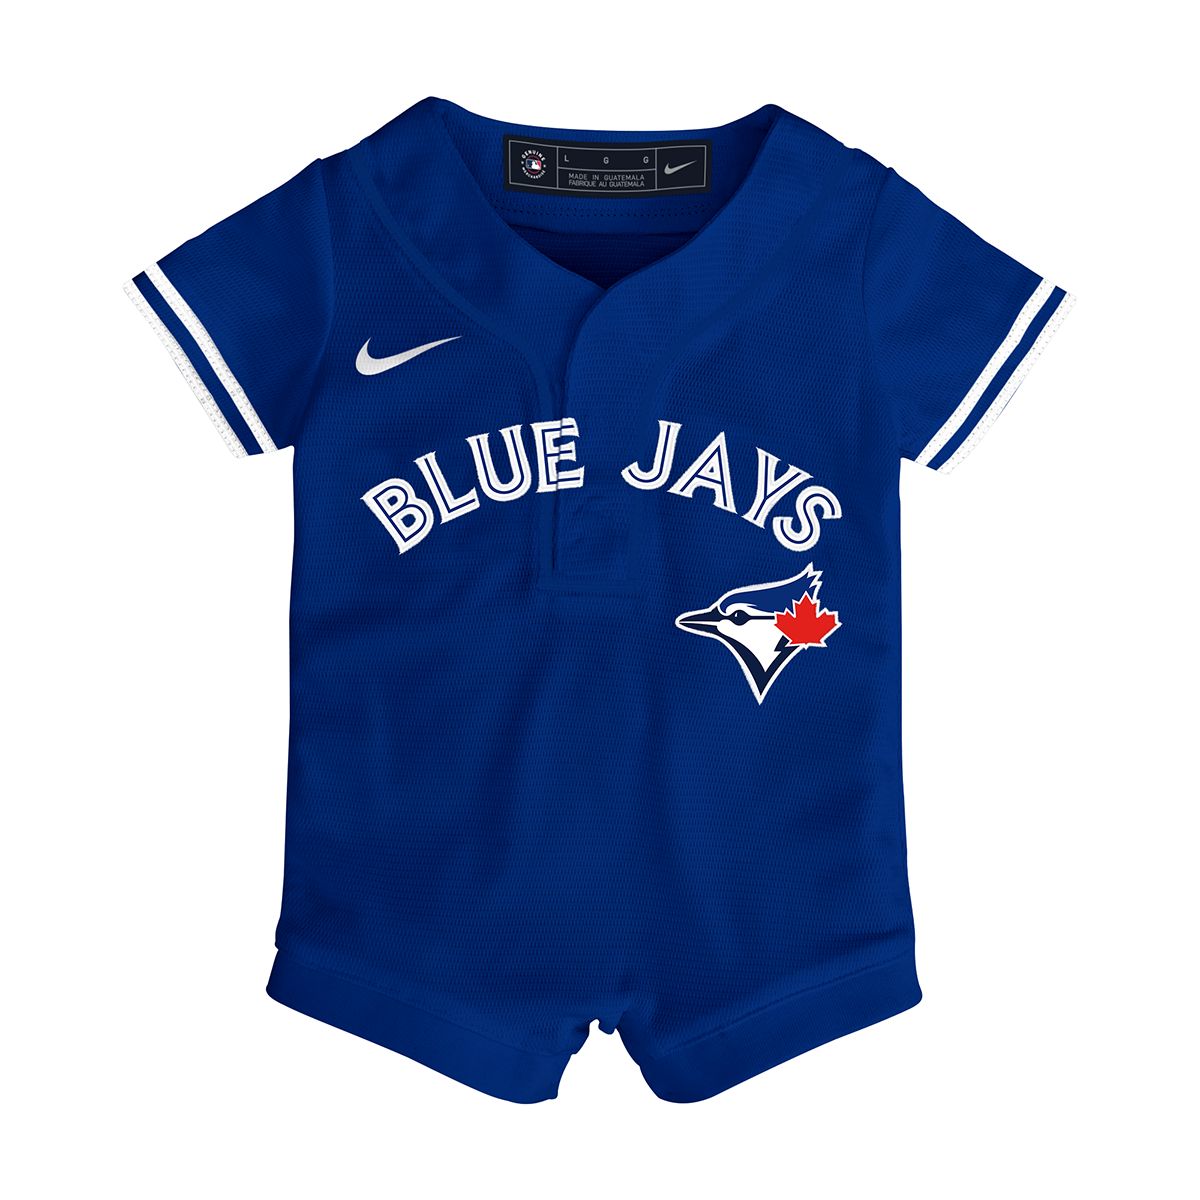 OUTERSTUFF Toronto Blue Jays Outerstuff Replica Romper Jersey Baby